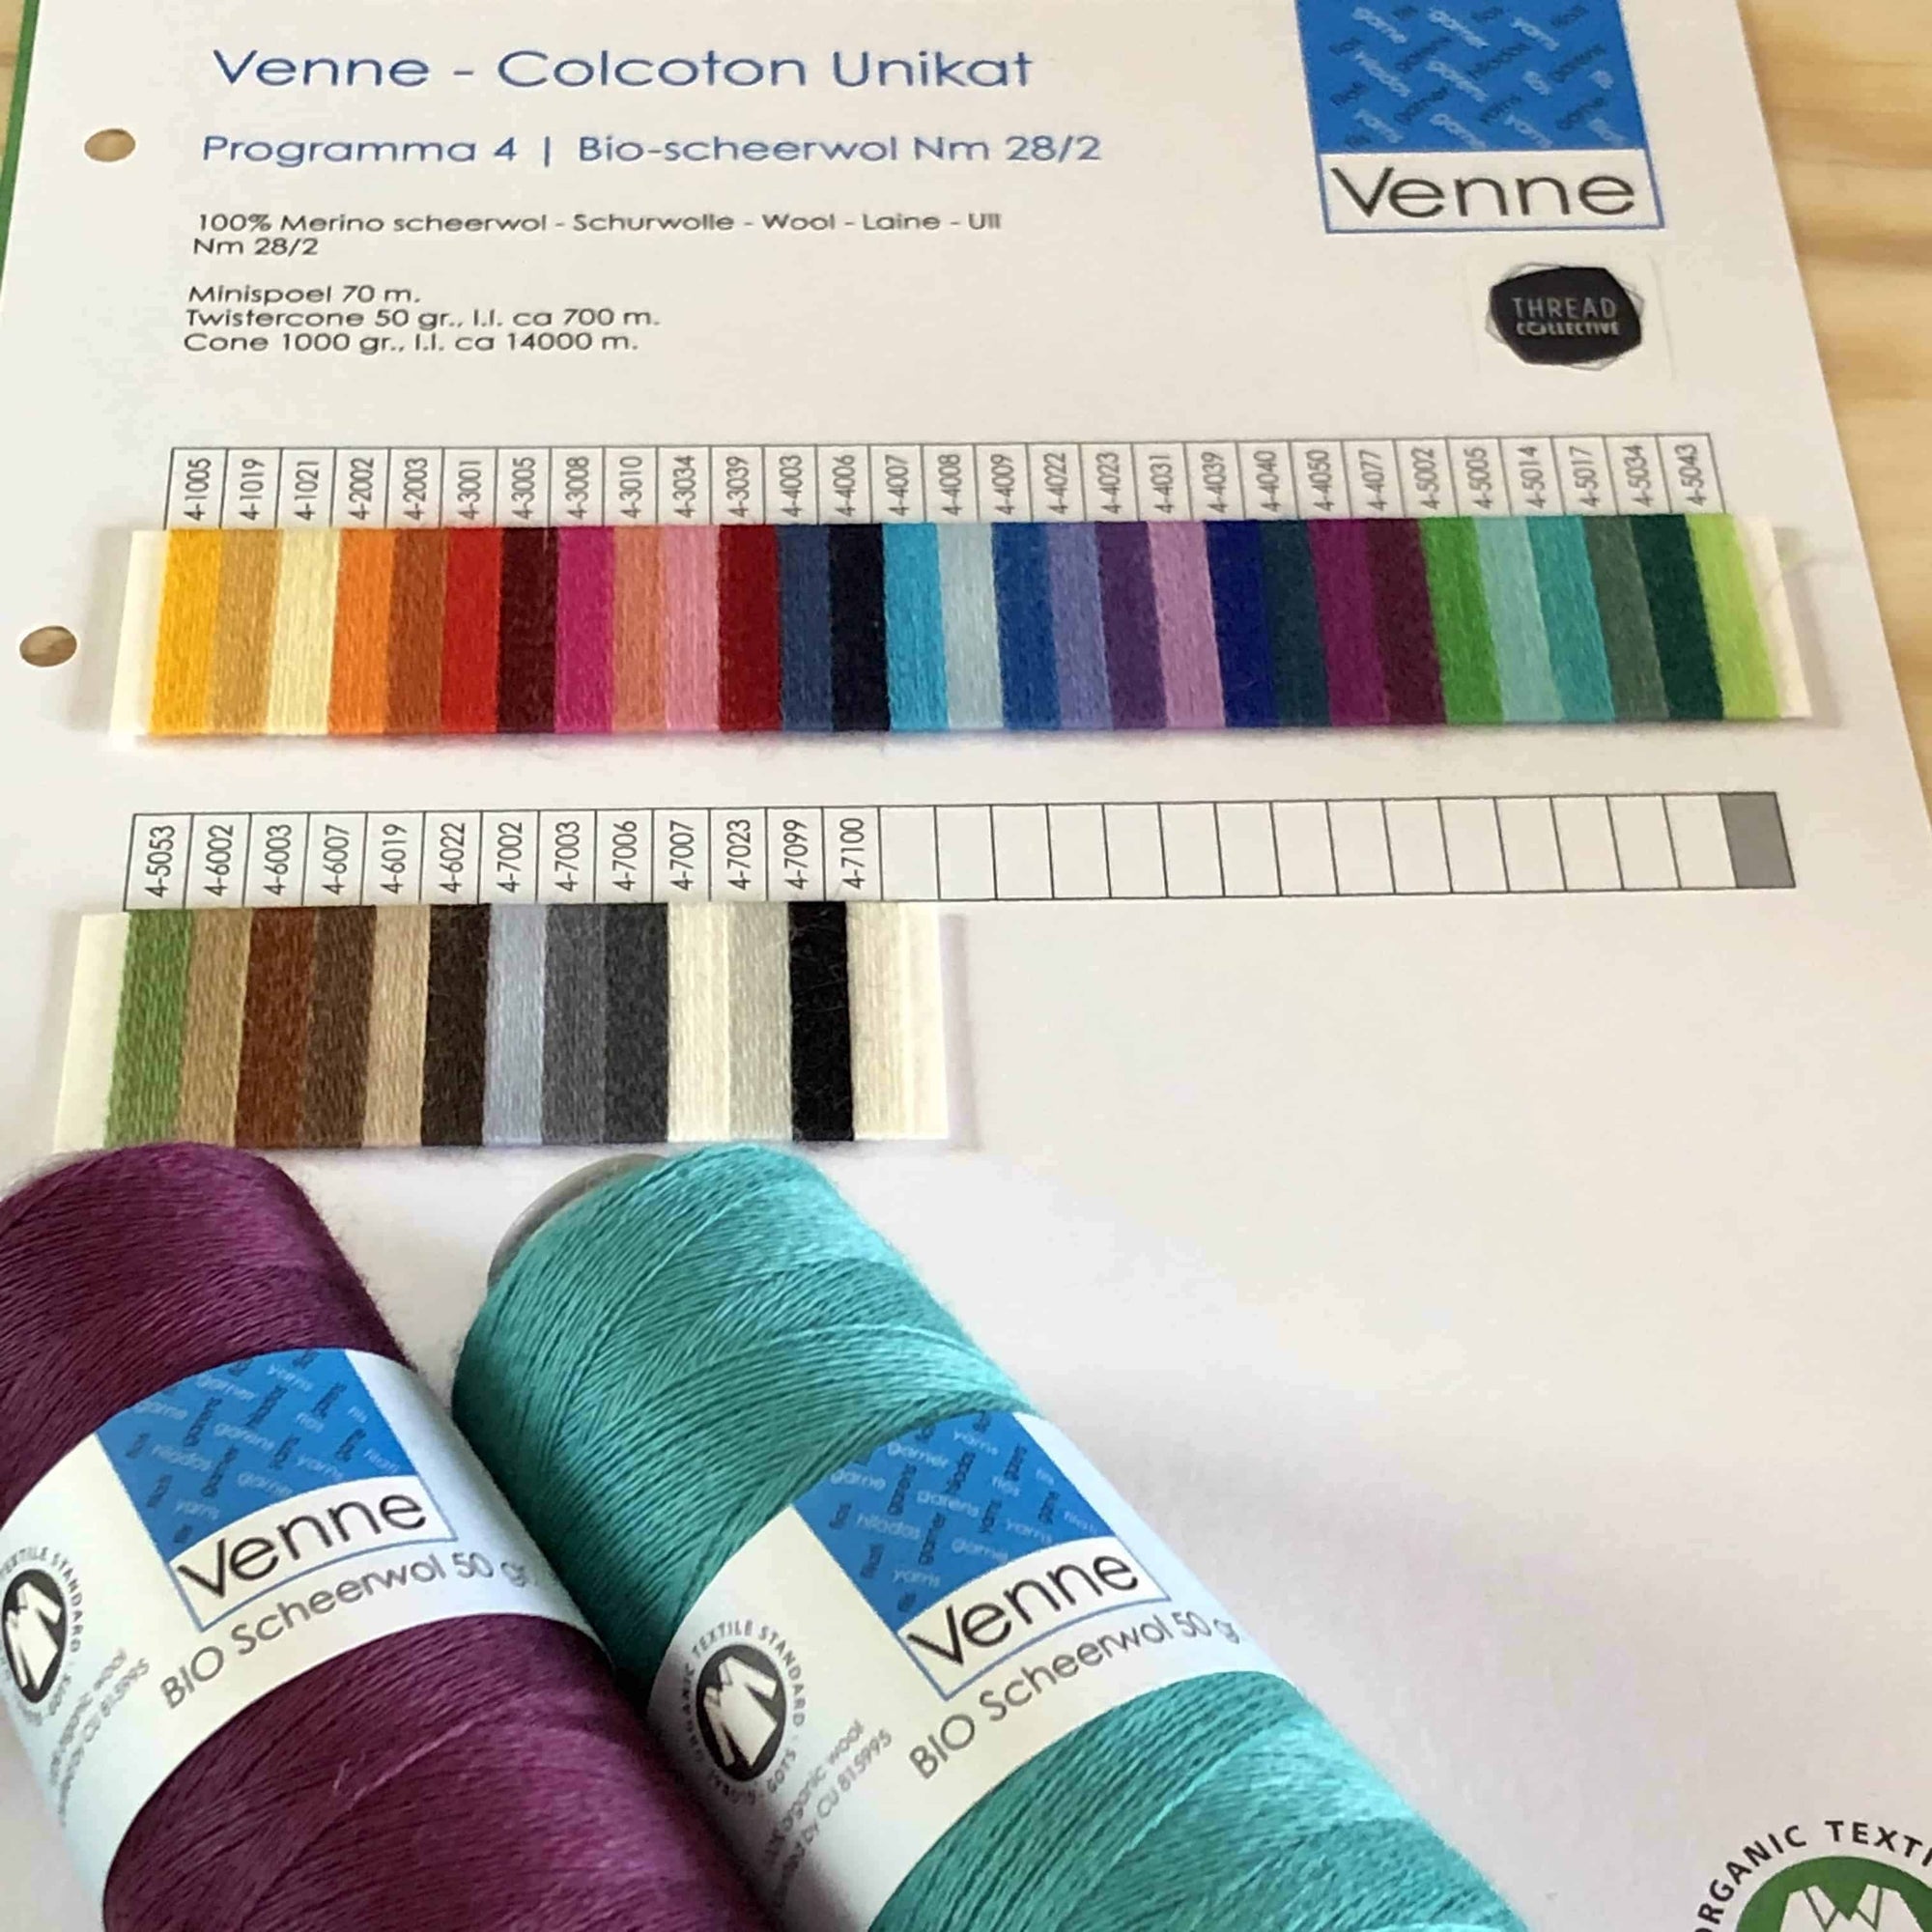 Venne Organic Merino Wool sample colour card - Thread Collective Australia